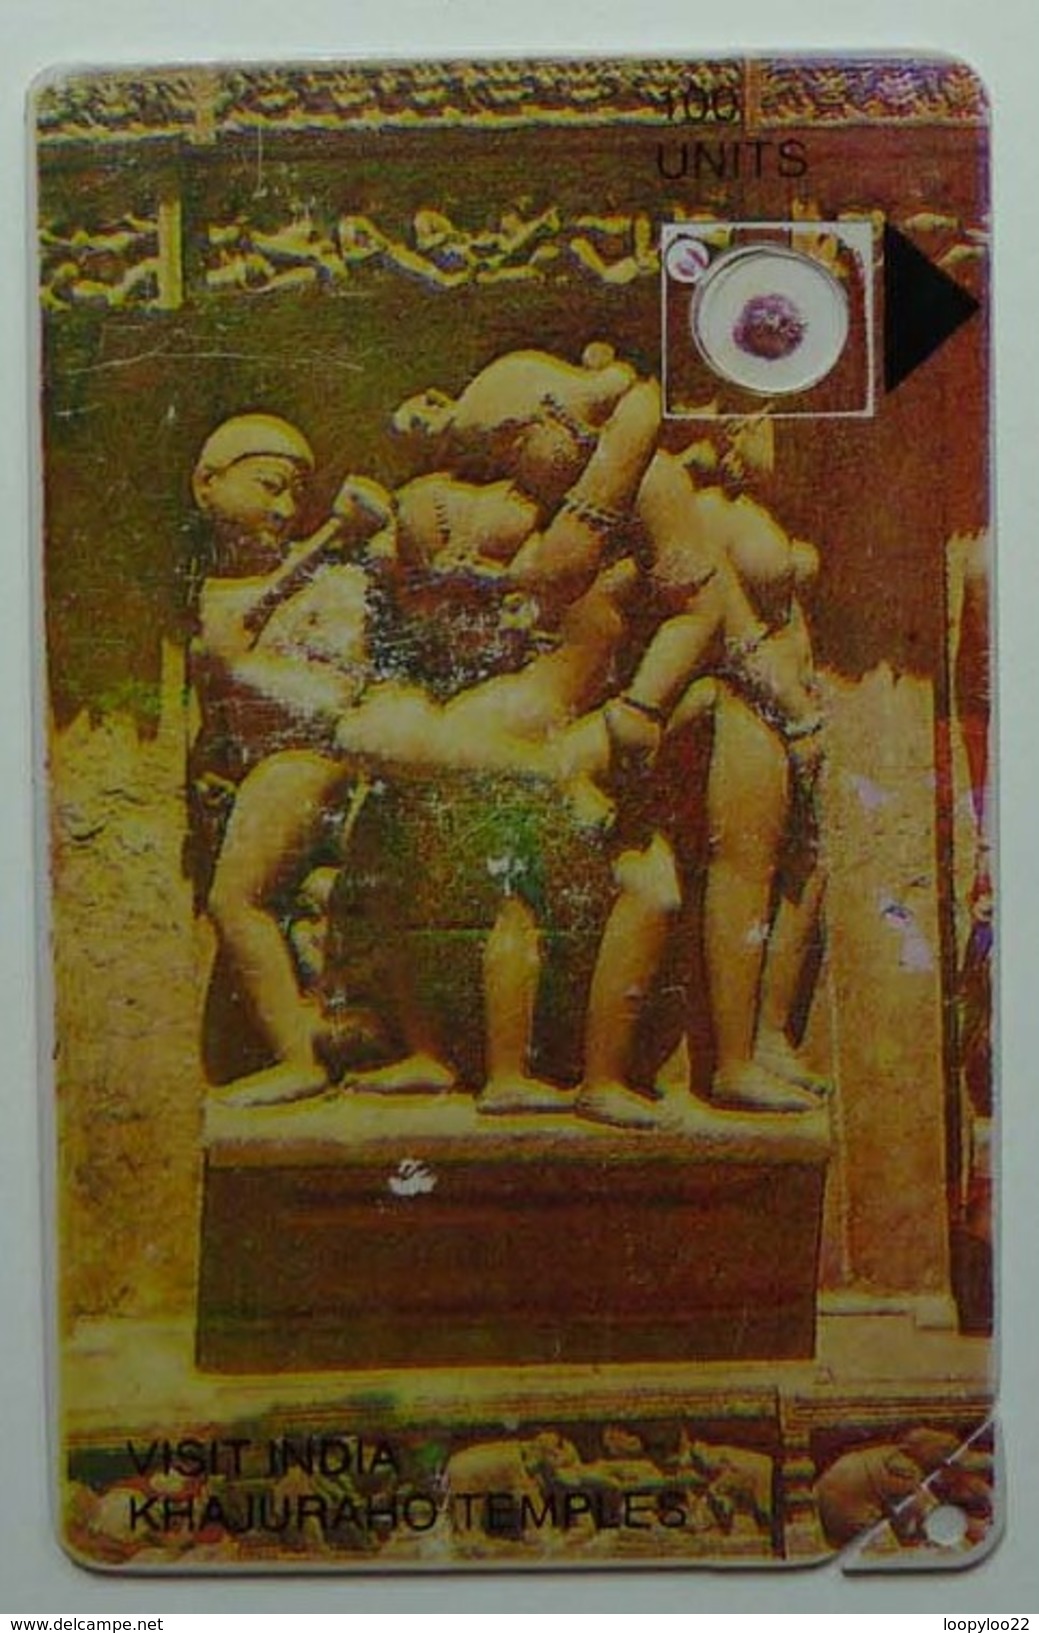 INDIA - 100 Units - Specimen - Very Early Aplab - Visit India Khajuraho Temples - RRR - Indien